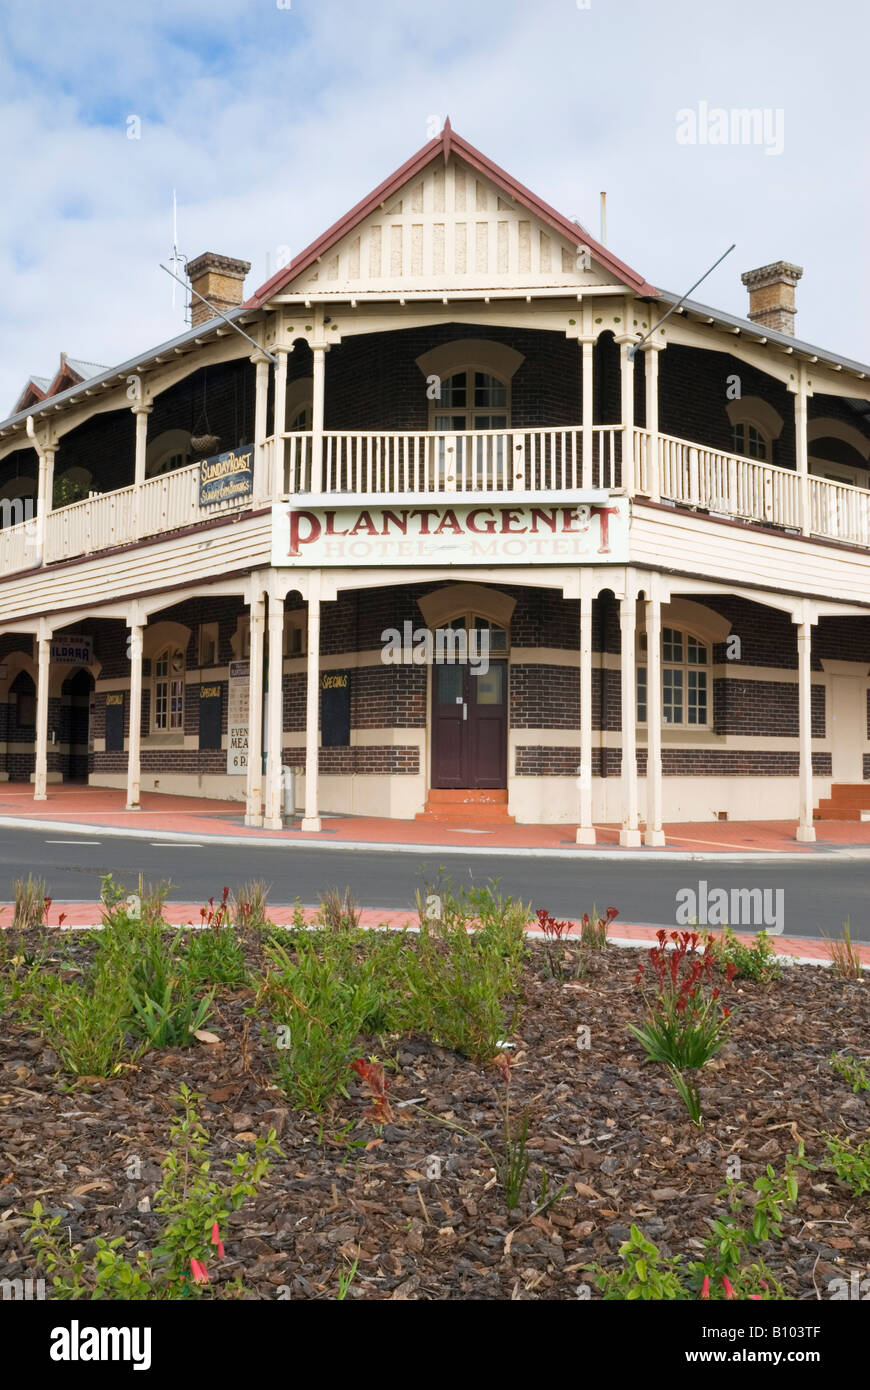 Plantagenet Hotel Motel, Mount Barker, Western Australia Stock Photo